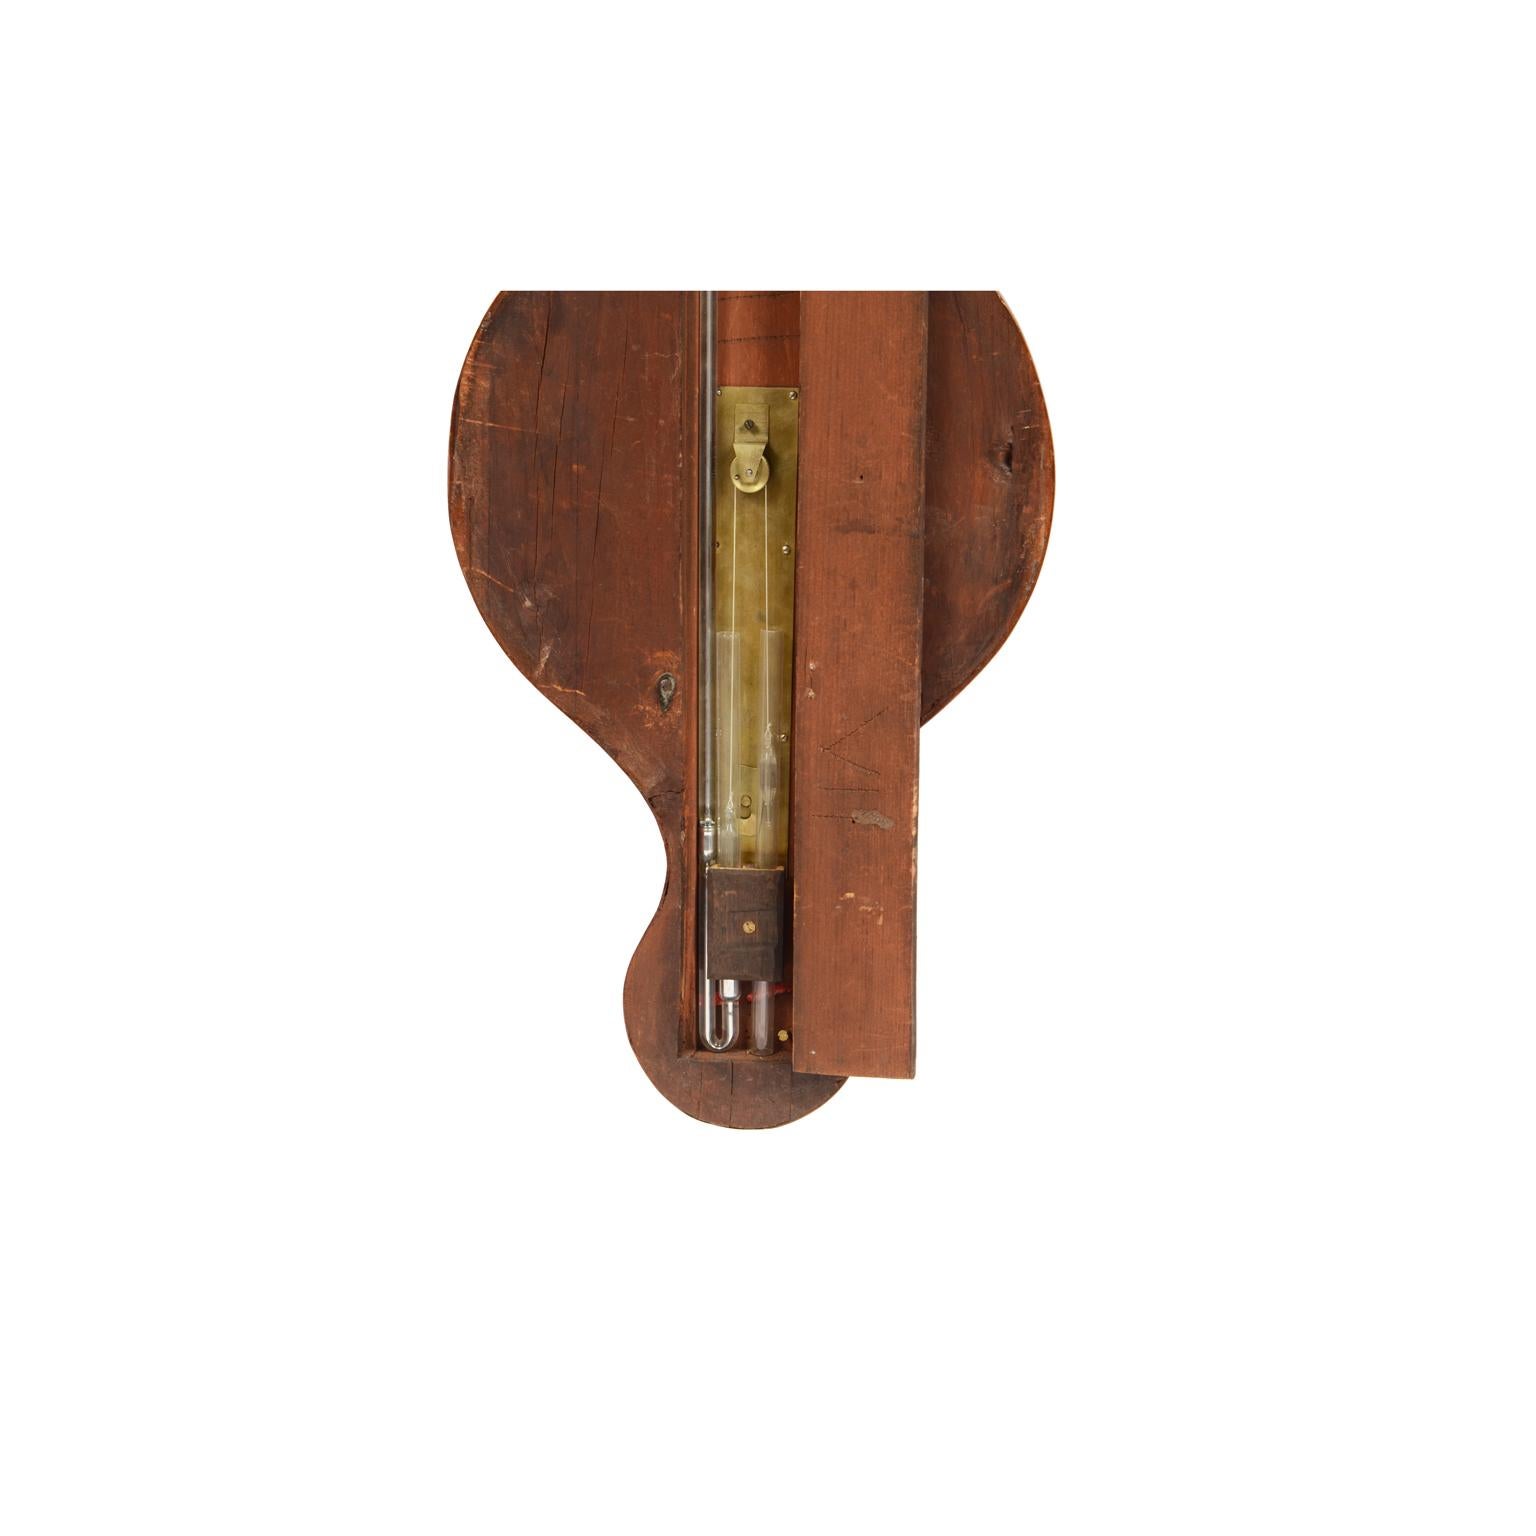 1850 Ciceri and Pini Mahogany Barometer Antique Weather Measuring Instrument  11